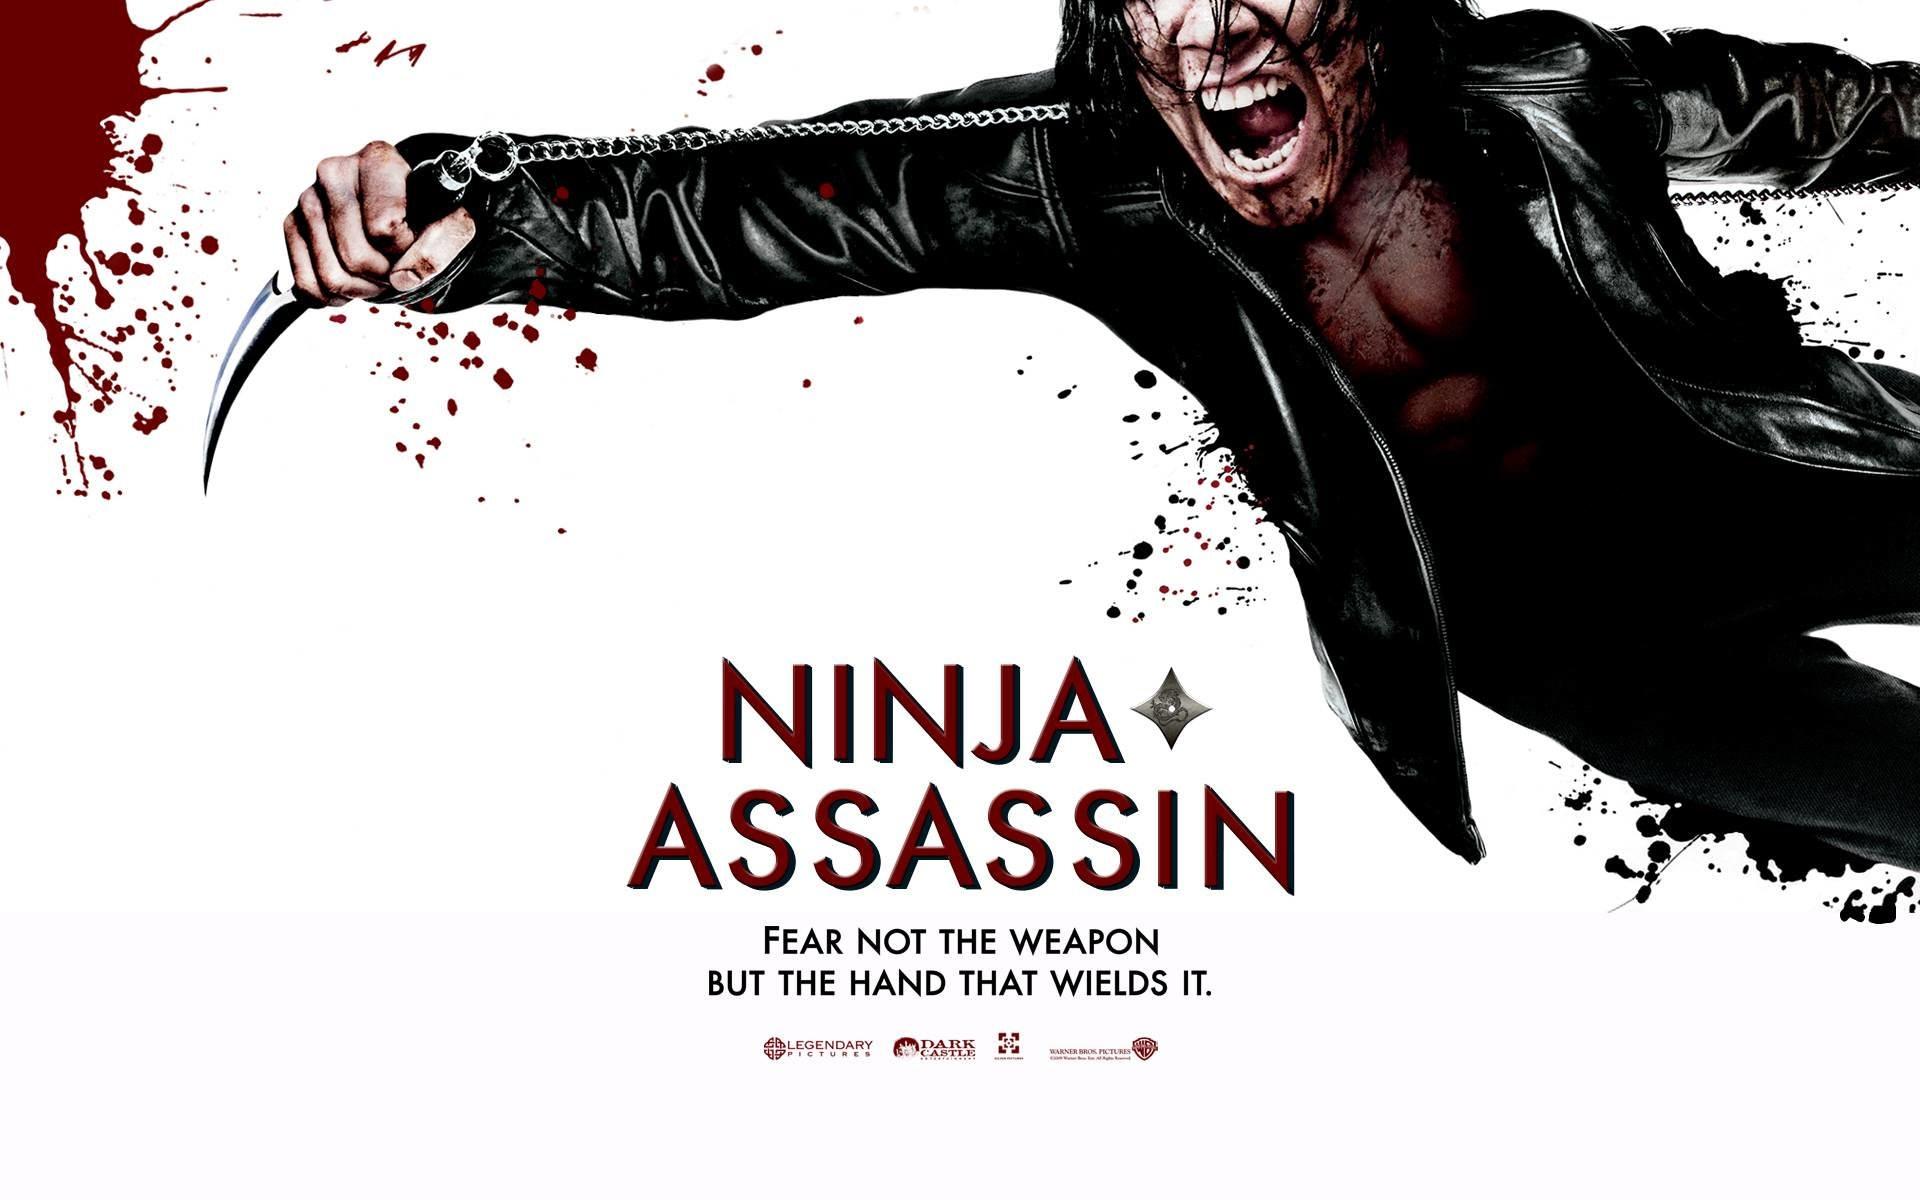 Ninja Assassin wallpaper HD for desktop background